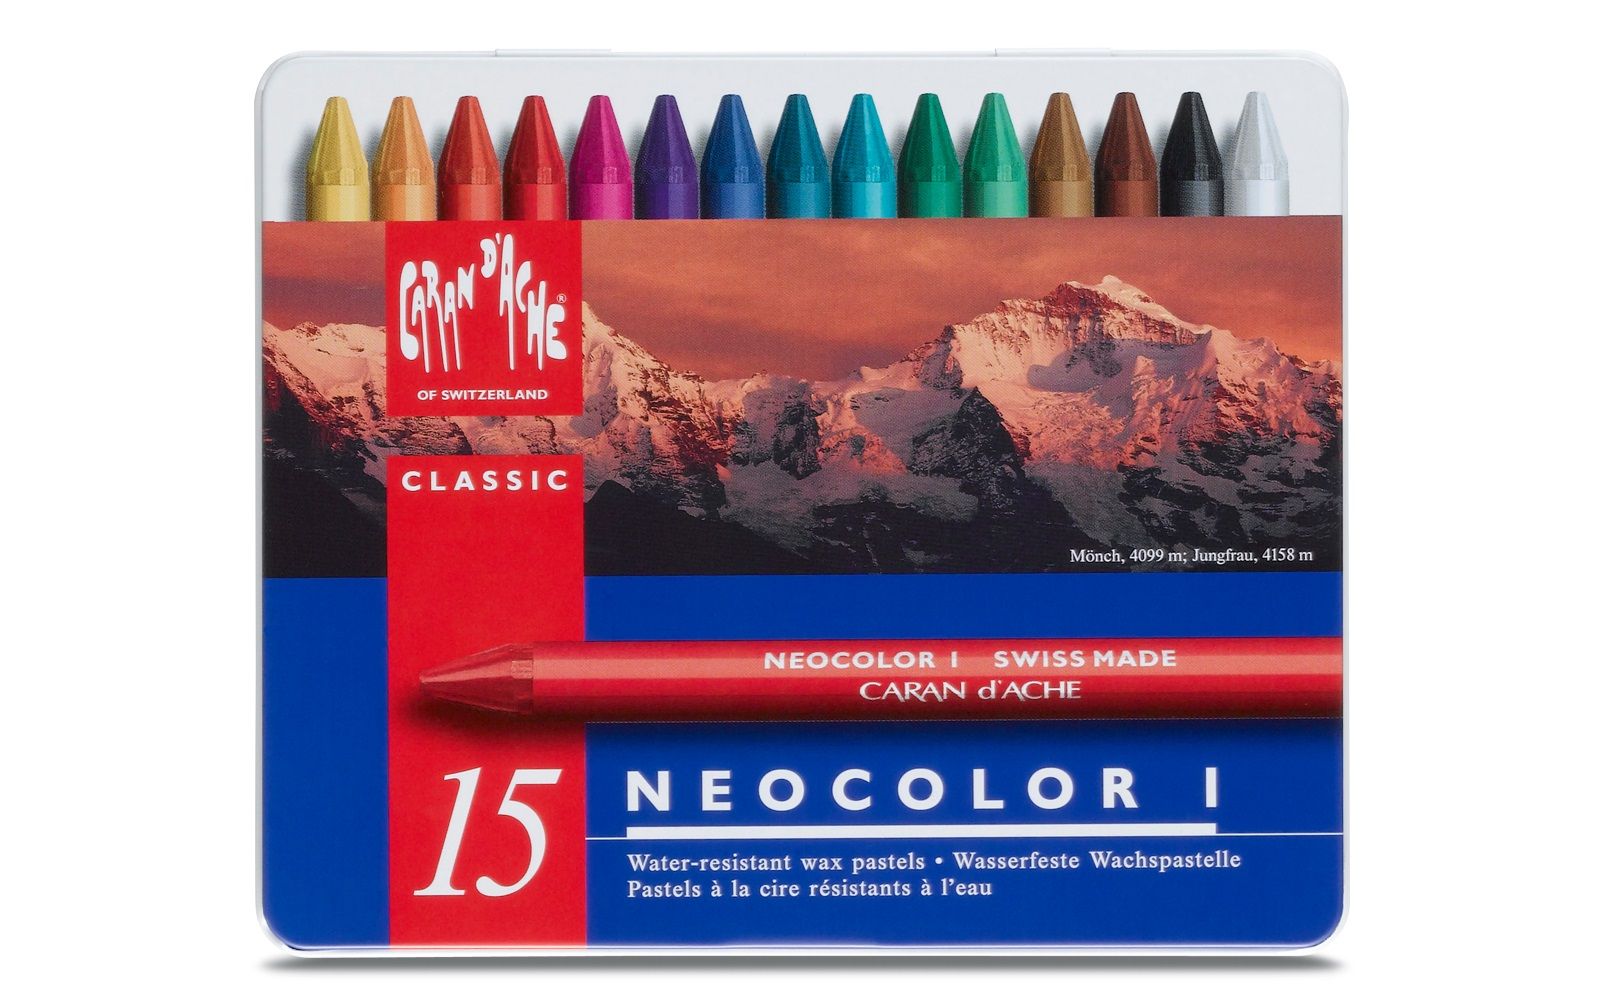 Caran d'Ache Neocolor I Wax Oil Crayons Ass. Pack of 15